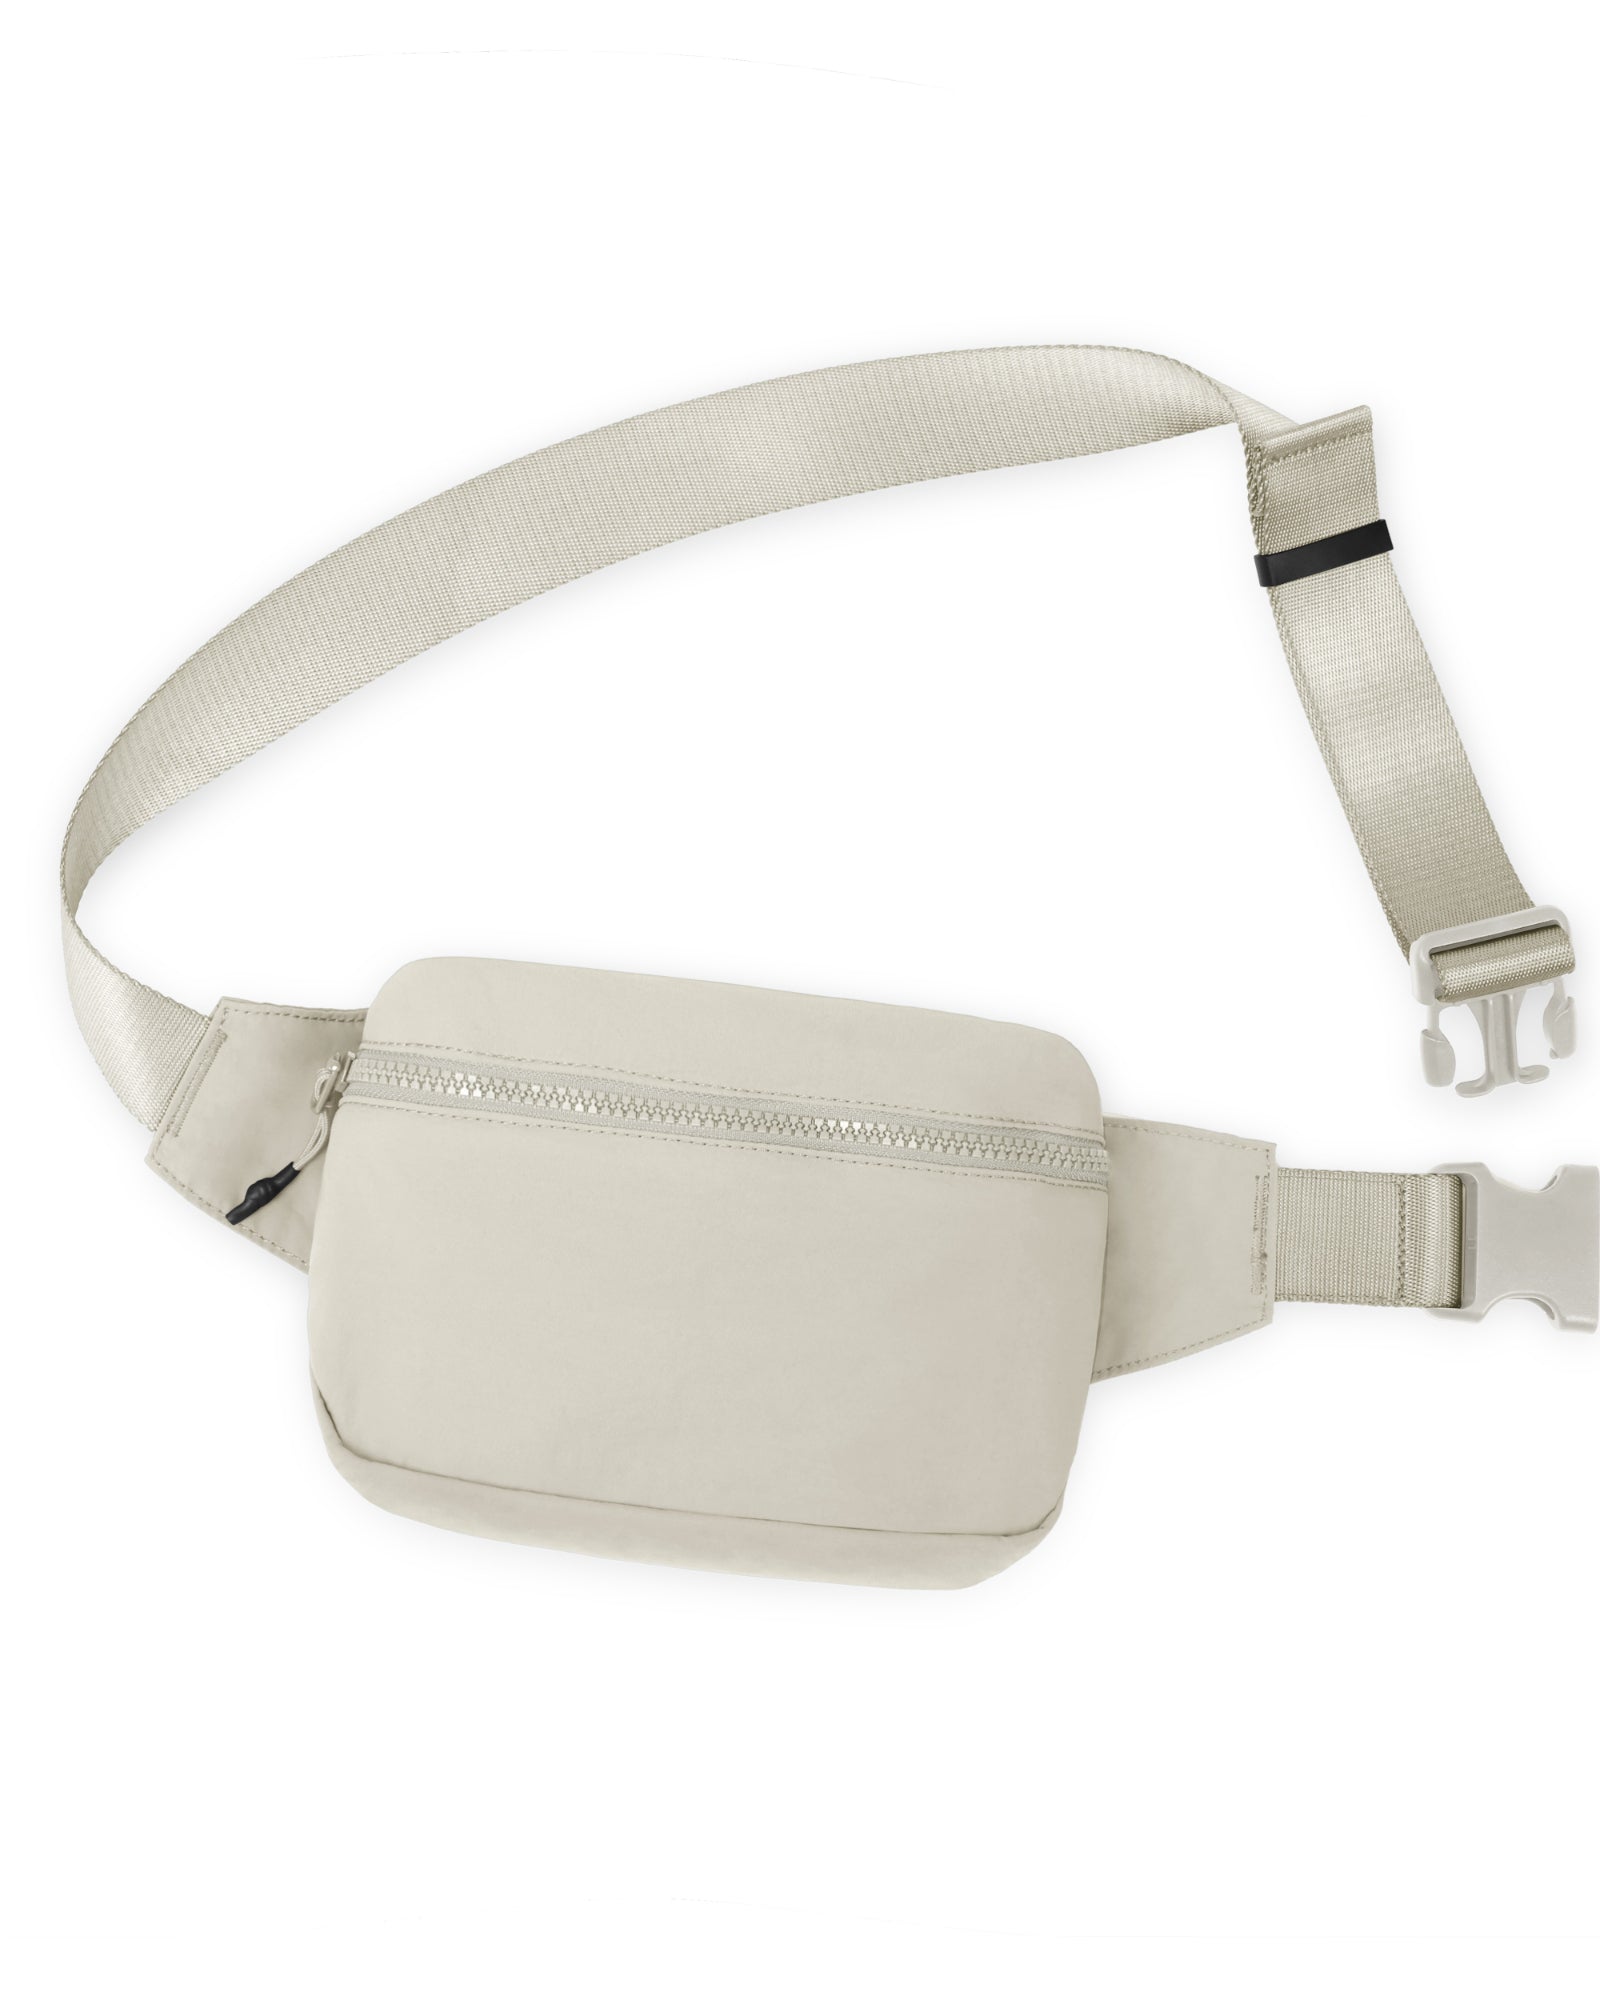 2L Belt Bag with Adjustable Strap Light Grey 8.5" x 5" x 2" - ododos